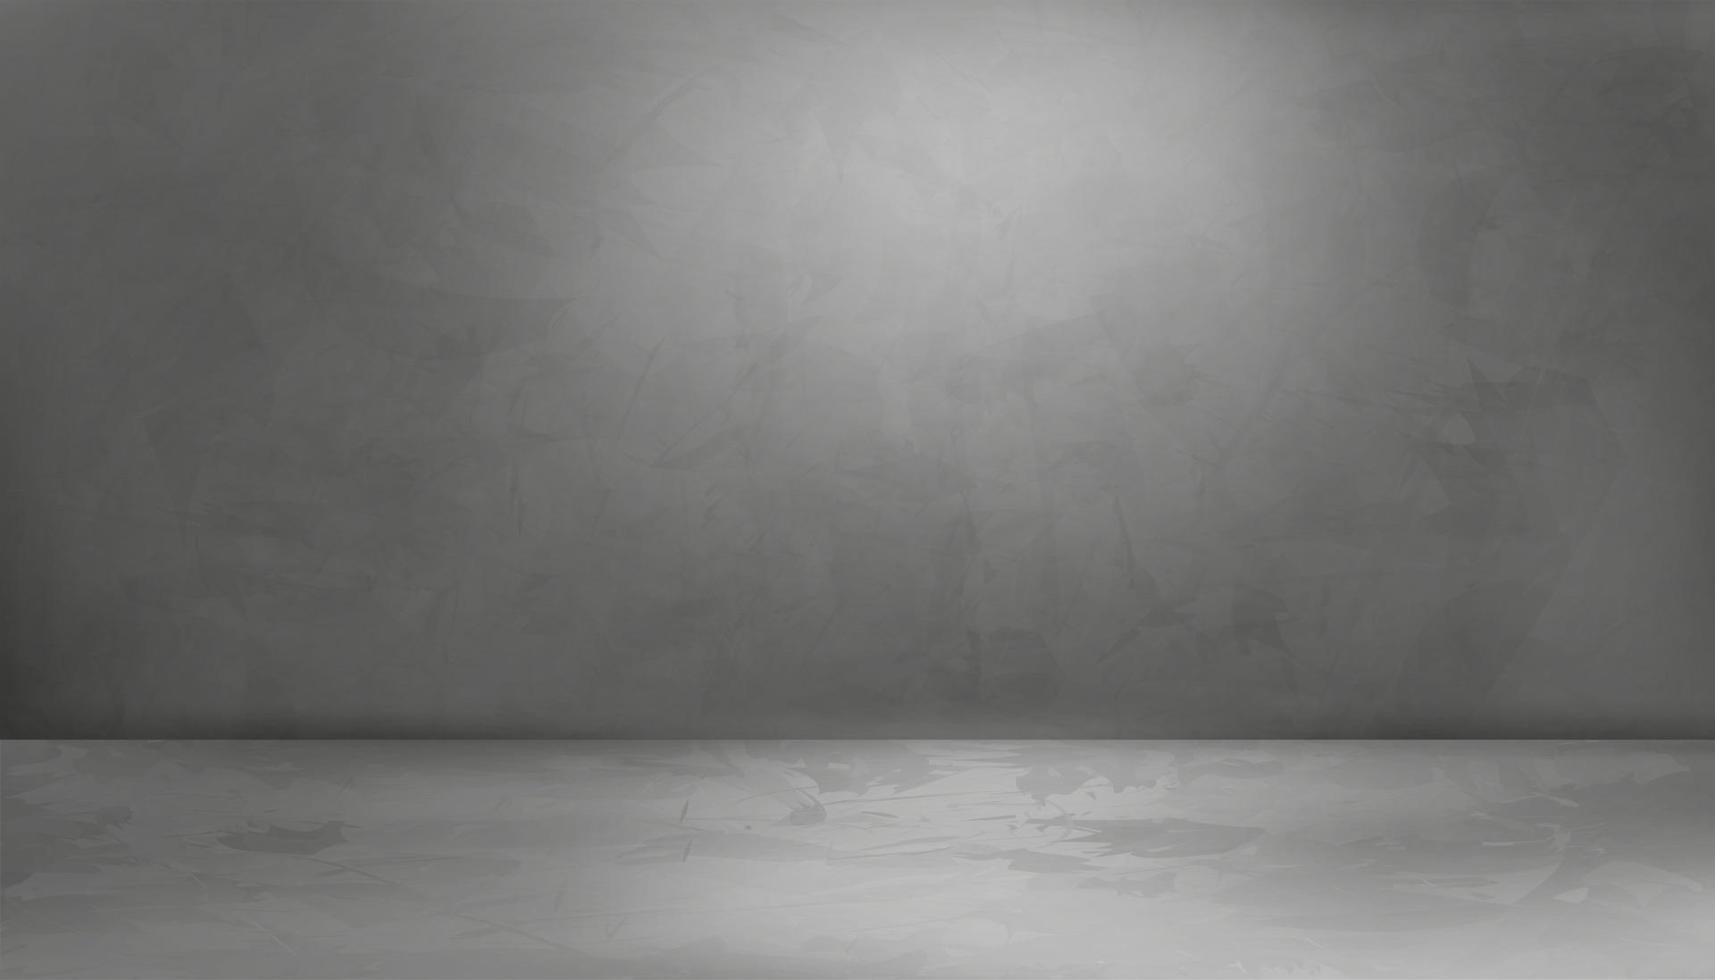 pared cemento textura fondo fondo, pantalla vacío habitación con ligero y sombra en gris hormigón pared, vector 3d estudio cemento piso con grieta superficie modelo concepto para producto presentración